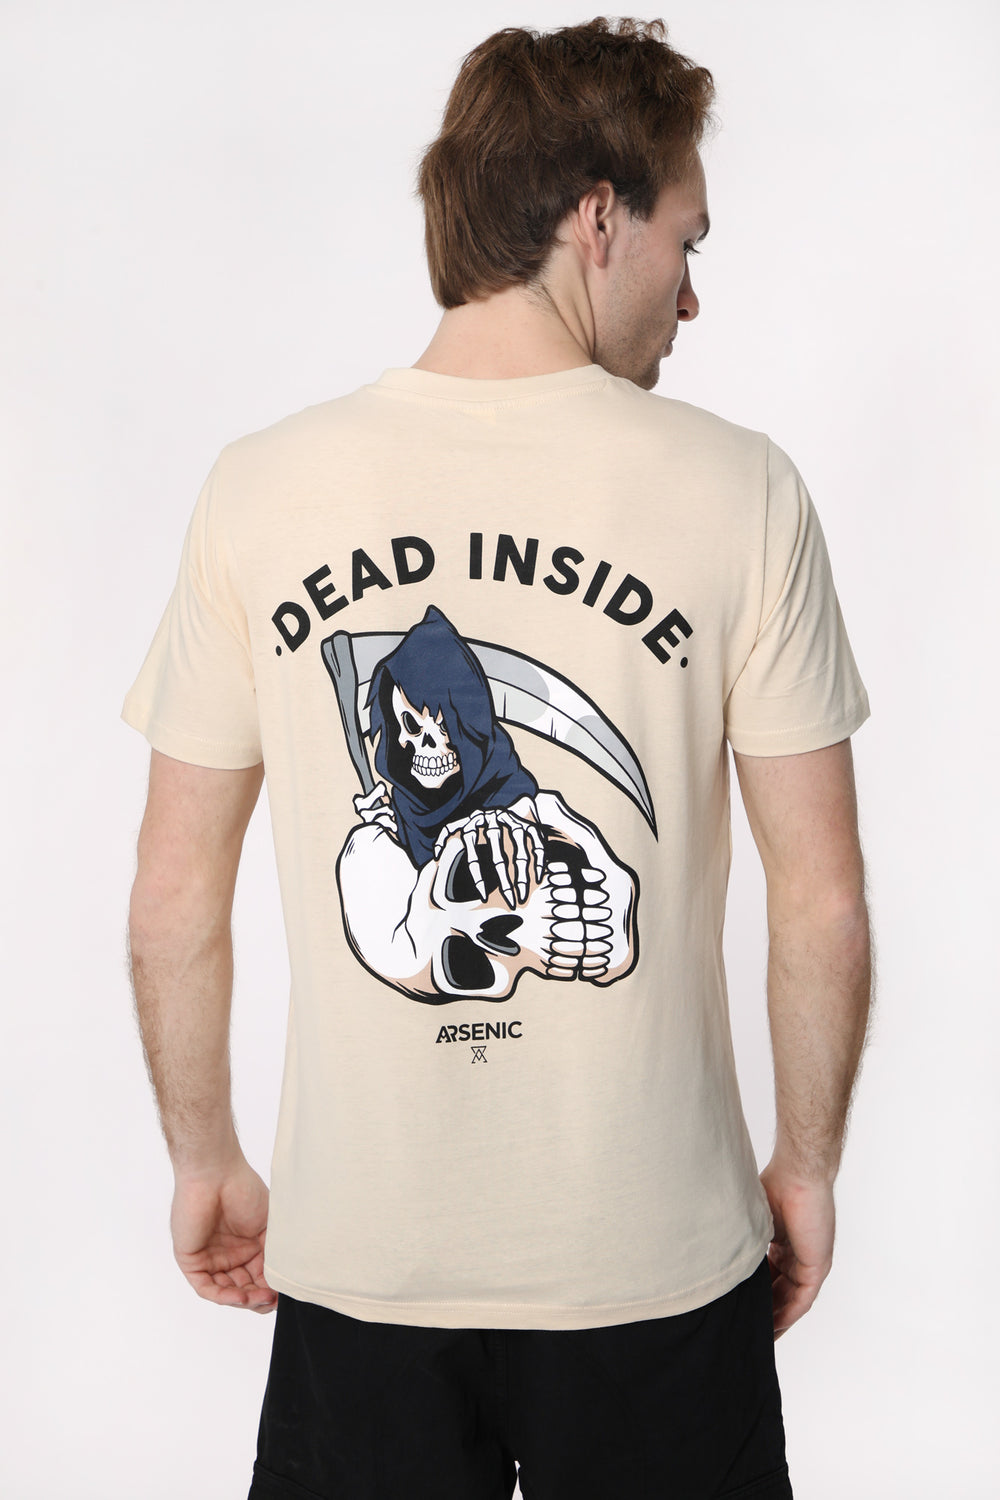 T-Shirt Imprimé Dead Inside Arsenic Homme T-Shirt Imprimé Dead Inside Arsenic Homme